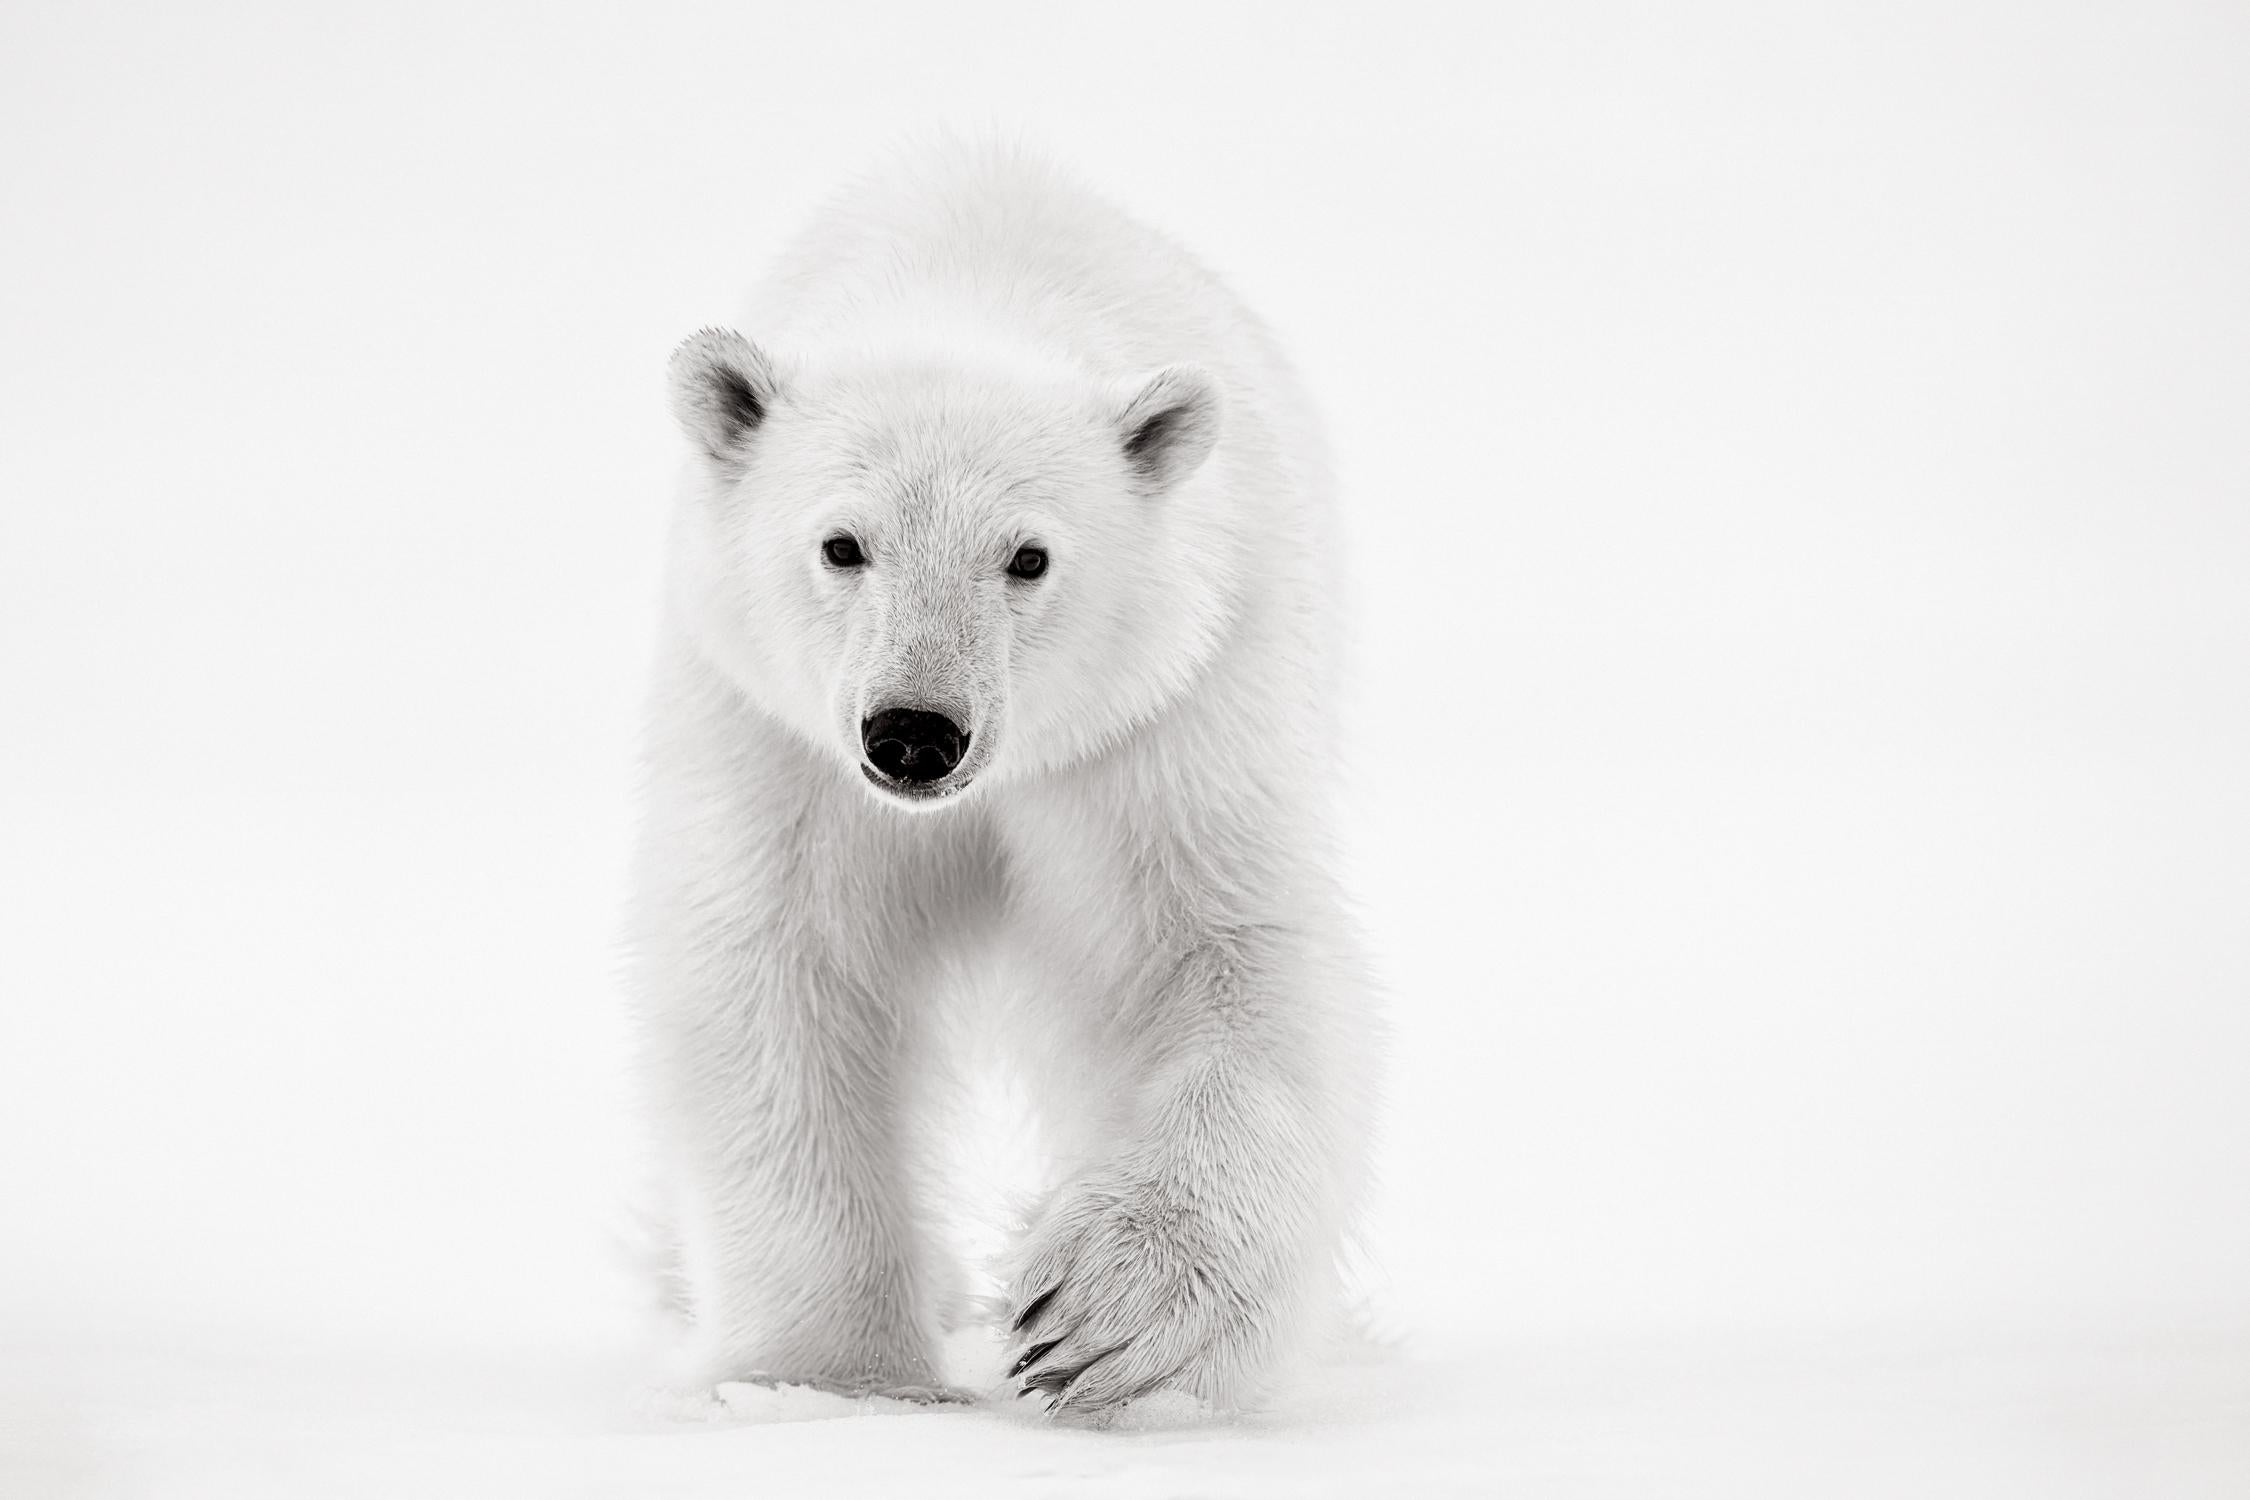 Drew Doggett Black and White Photograph - Intimate Portrait of a Polar Bear Walking Towards the Camera, Minimal 